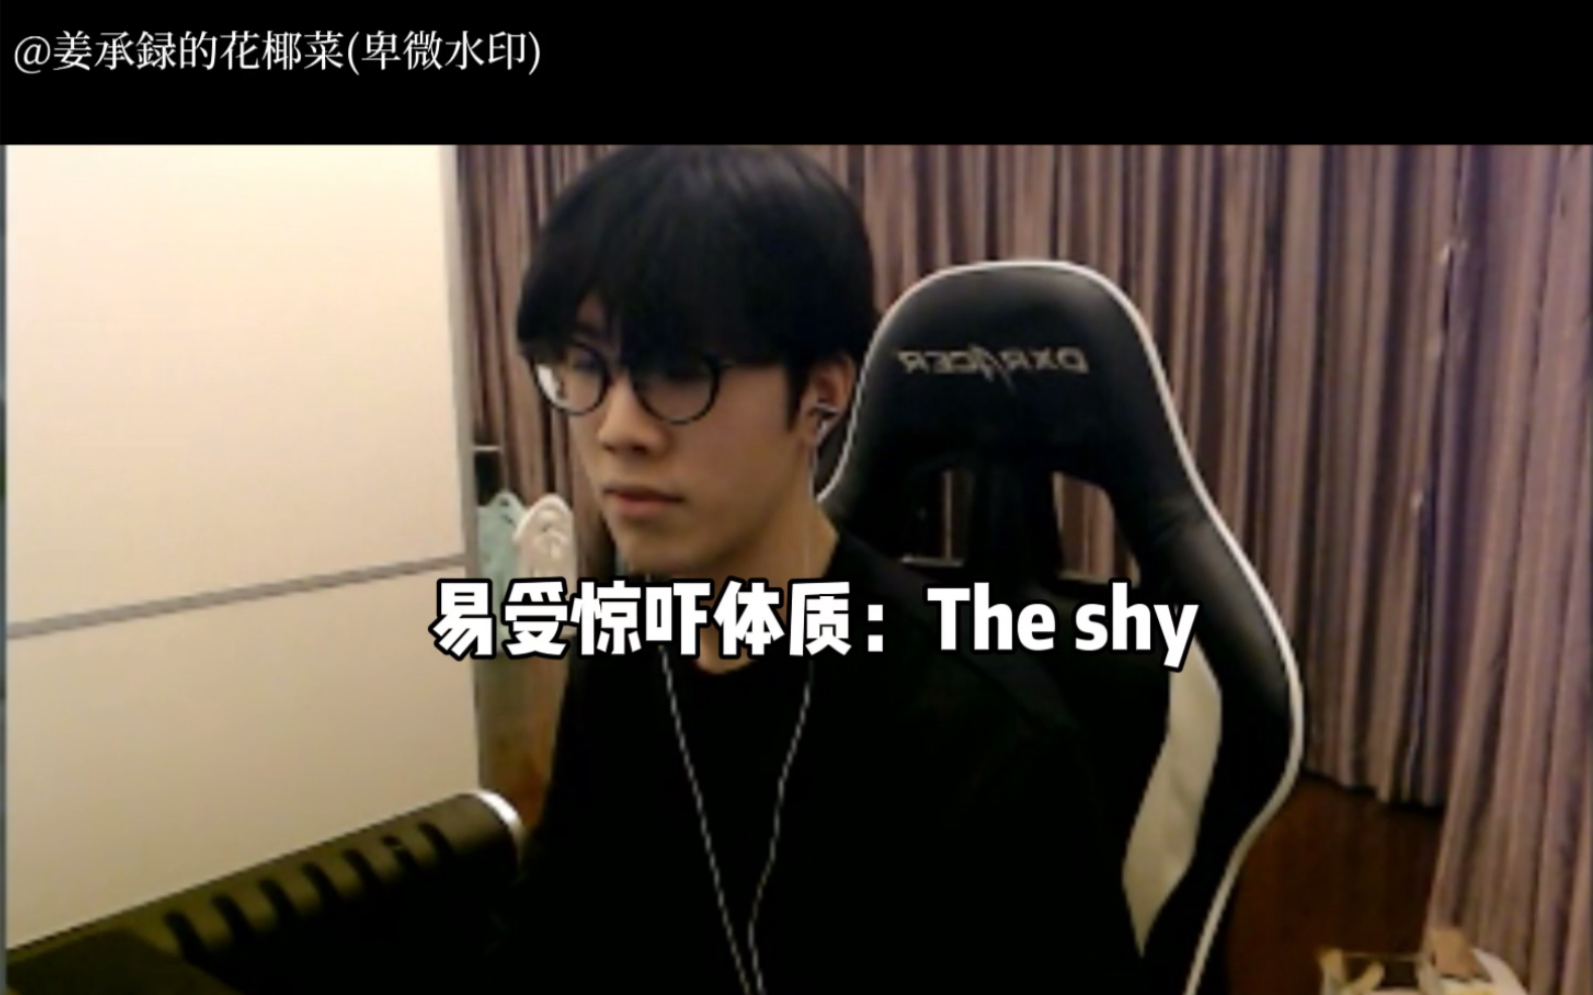 the shy-哔哩哔哩频道